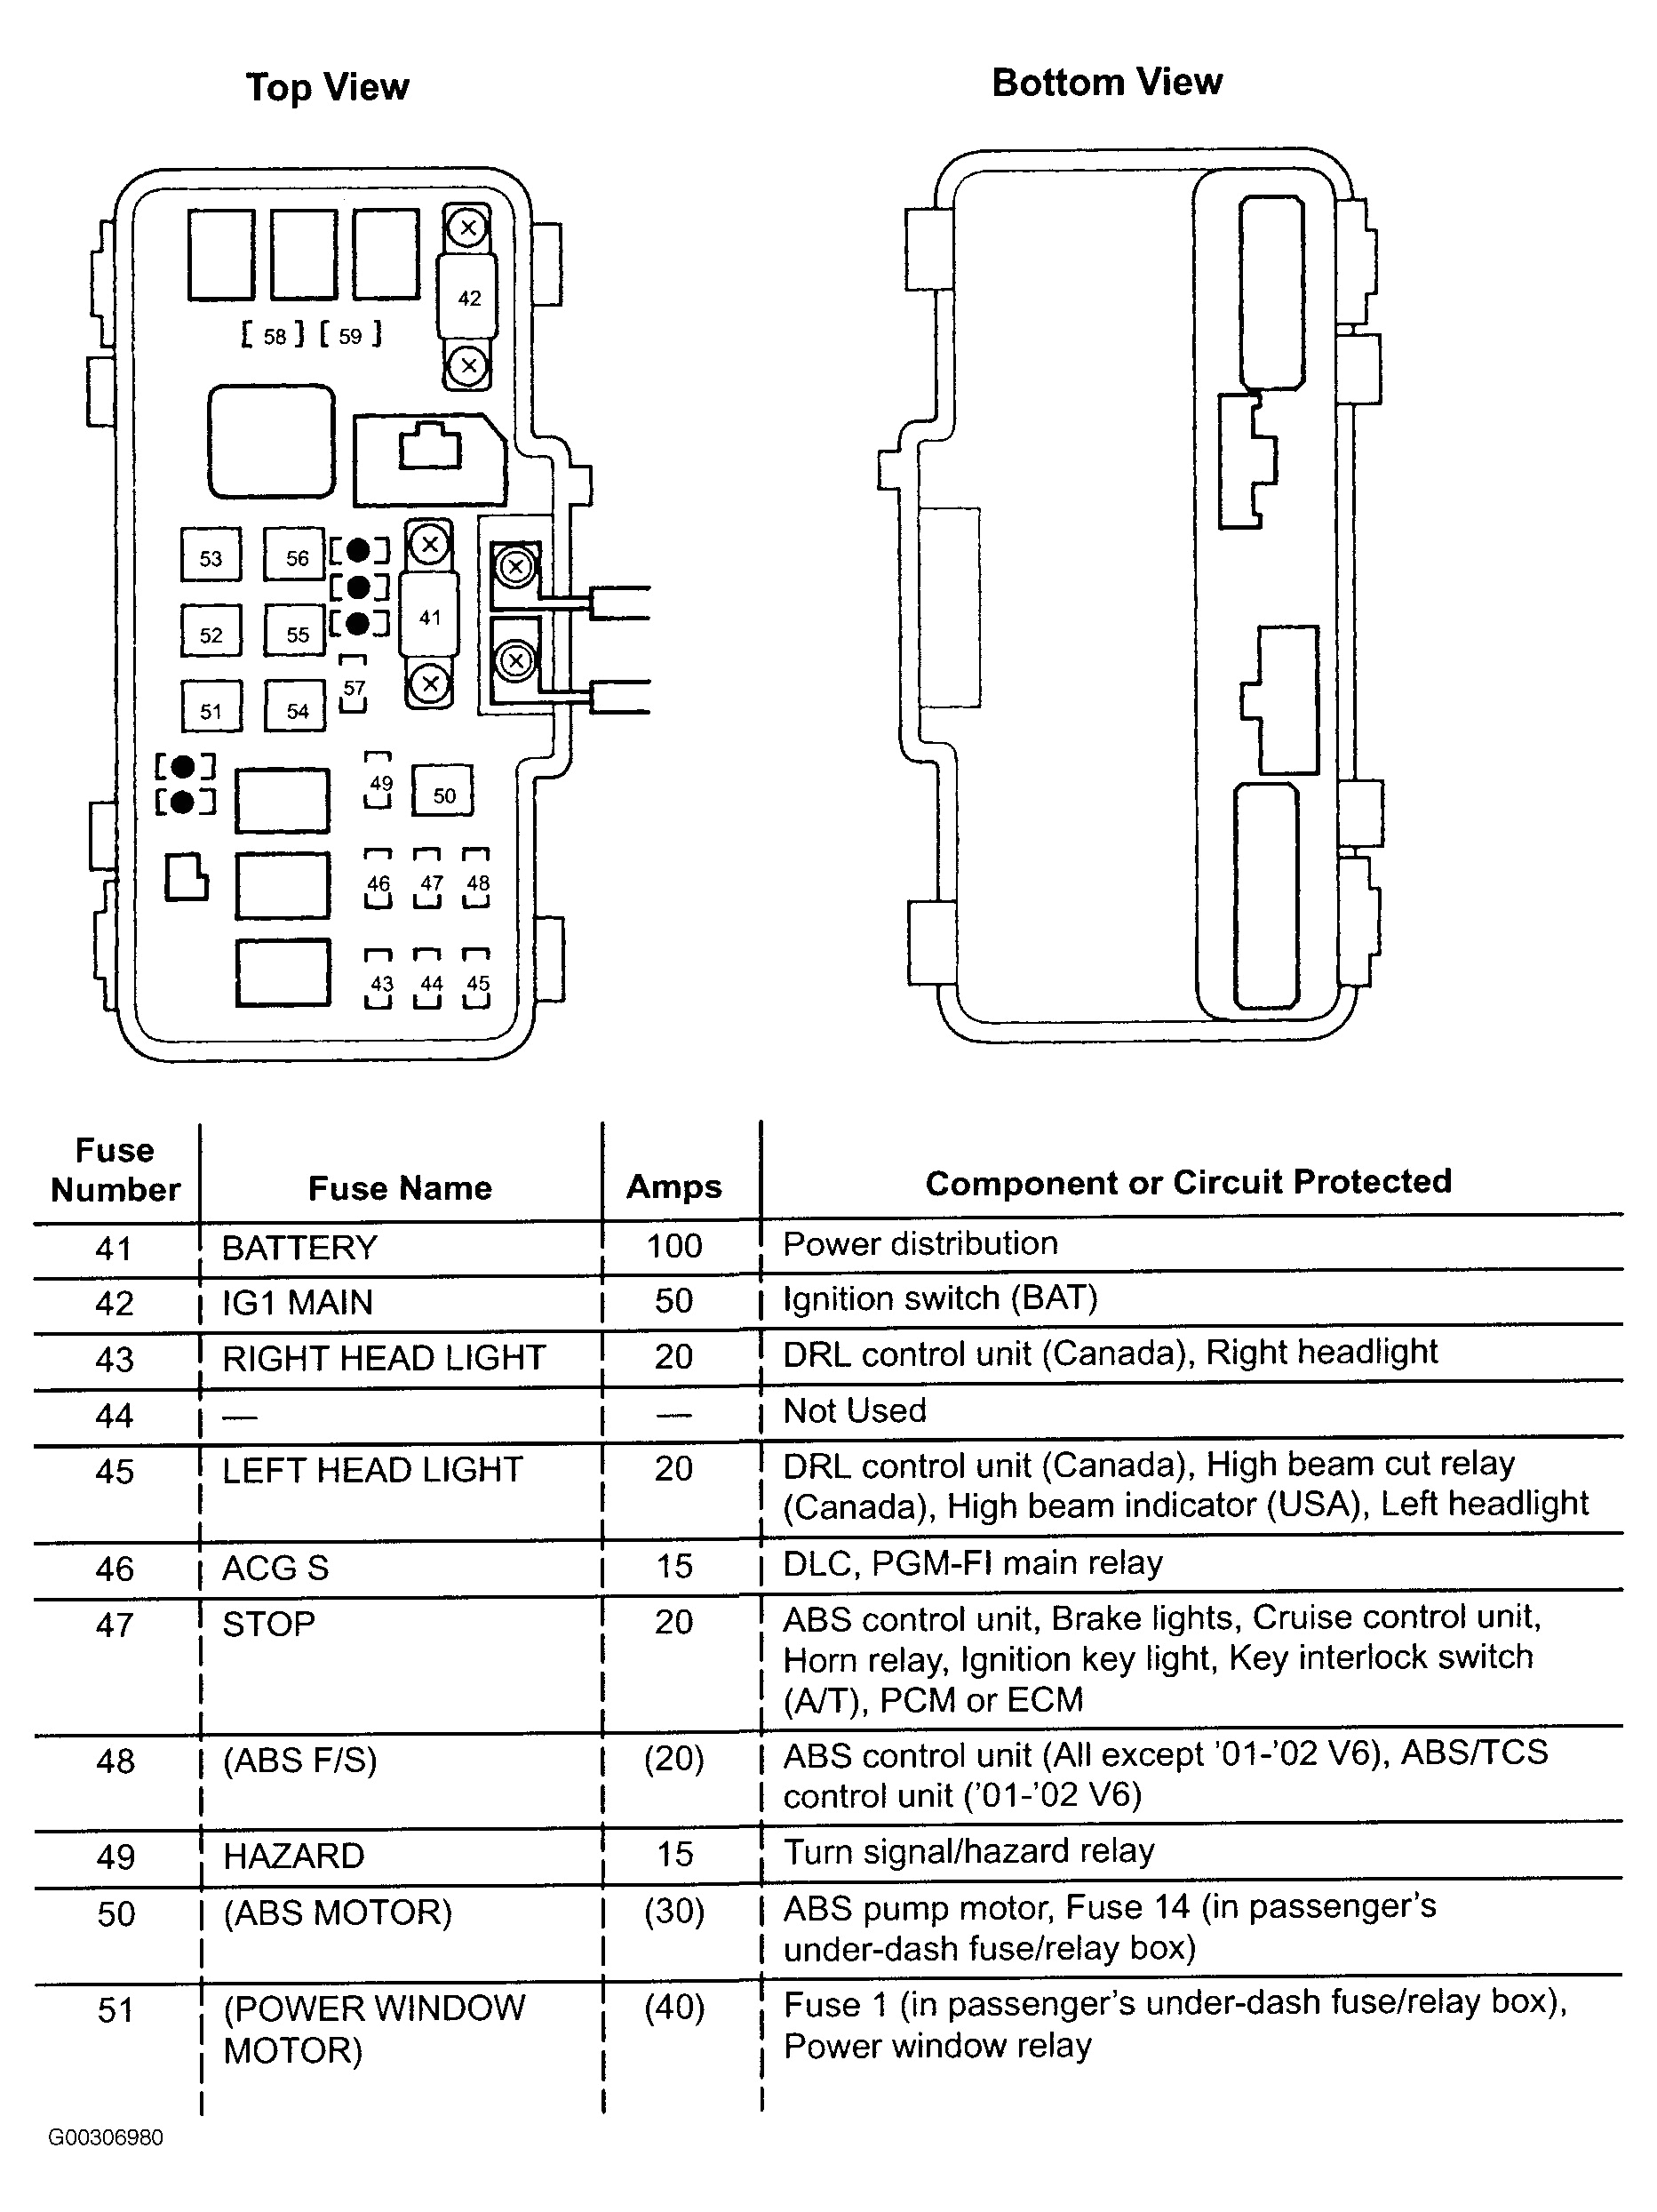 96 accord fuse diagram wiring diagram datasource 96 honda accord fuse box diagram 96 honda accord fuse panel diagram